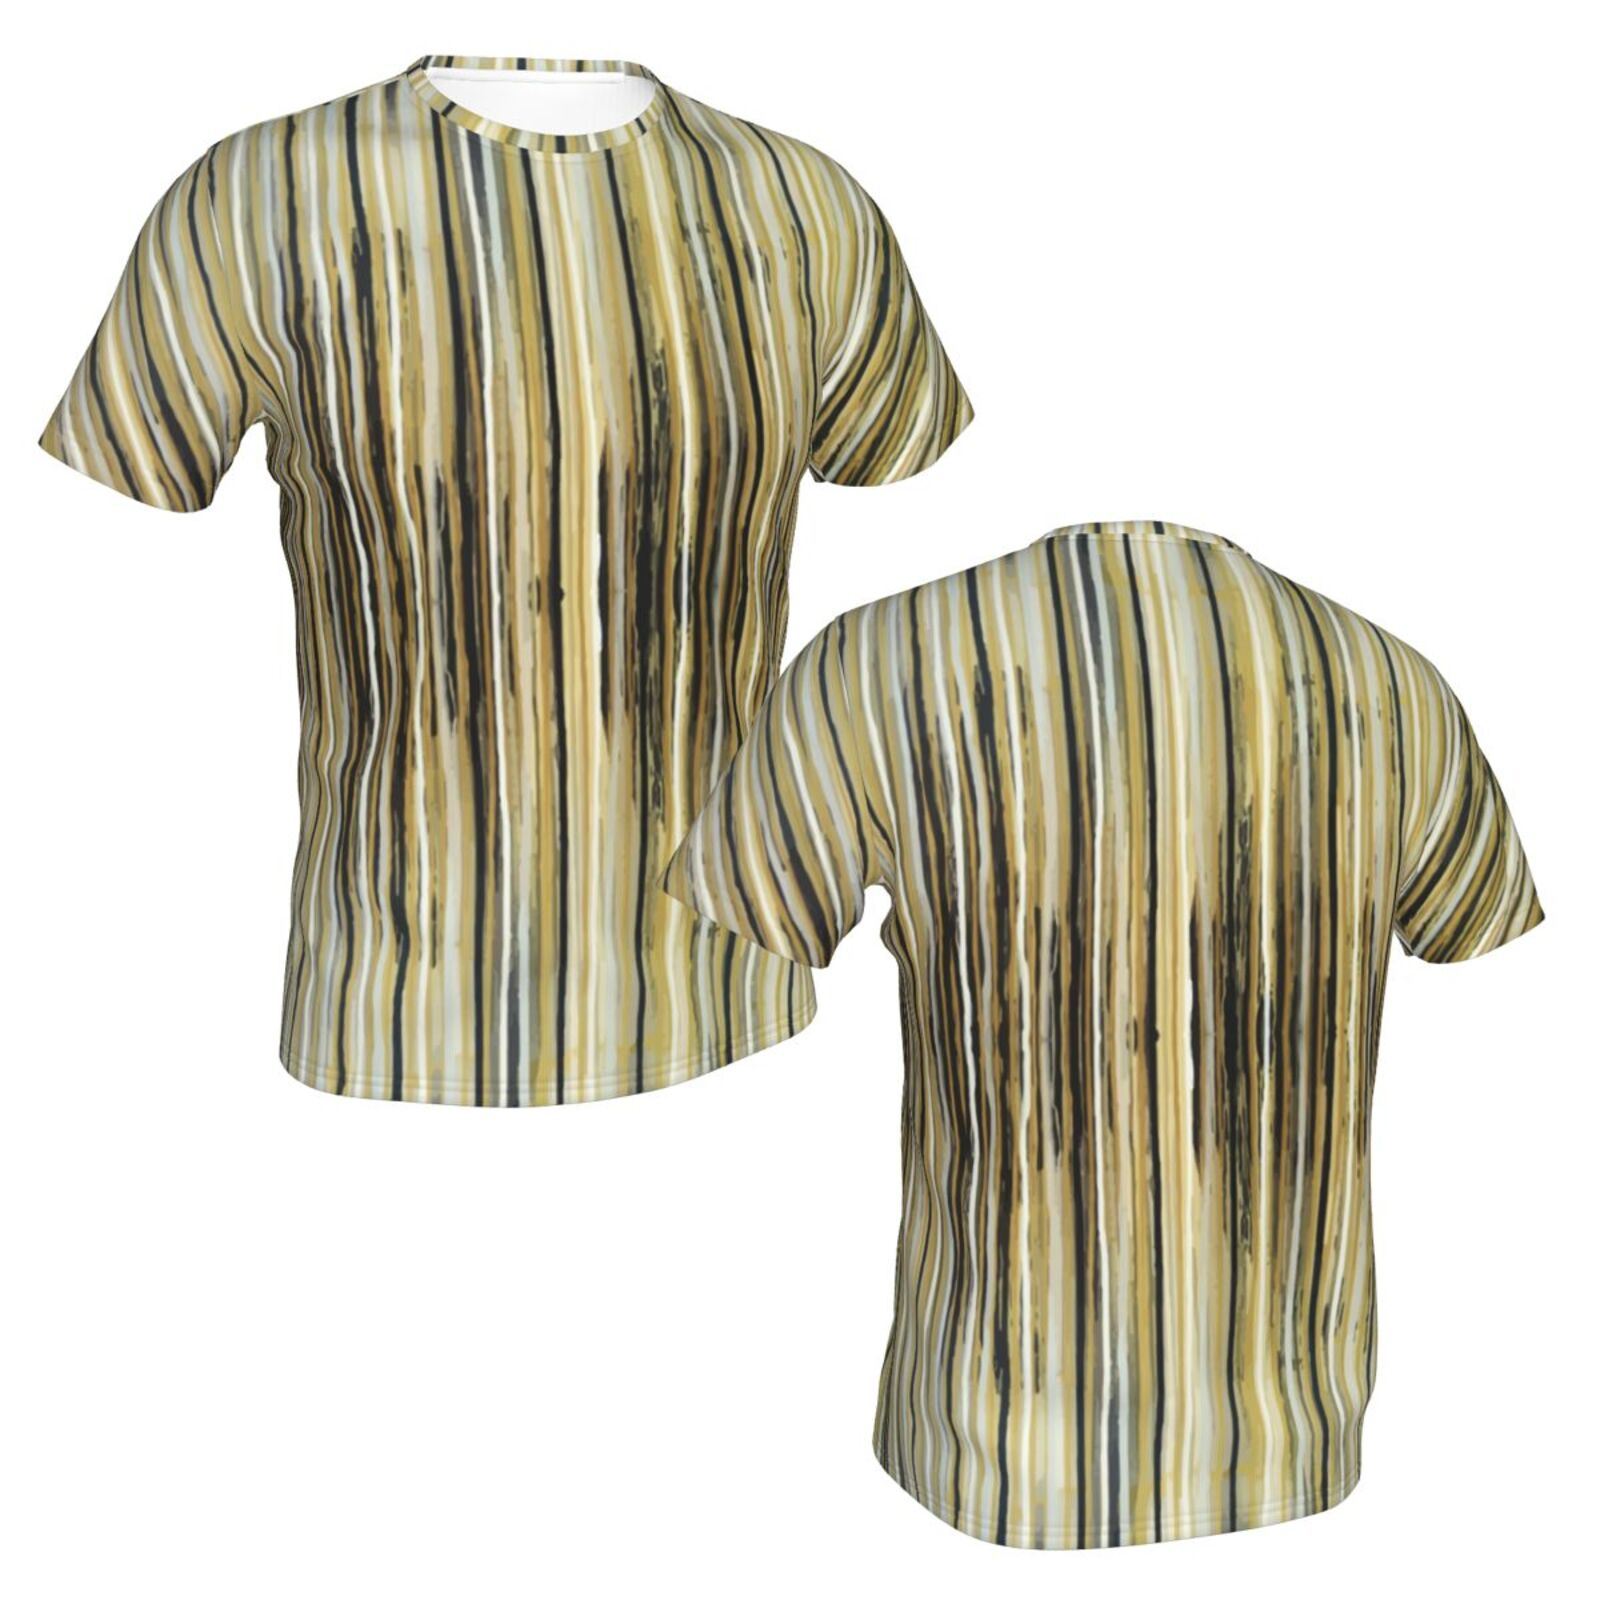 A Crush On Stripes Malerei Elemente Klassisch Belgien T-shirt